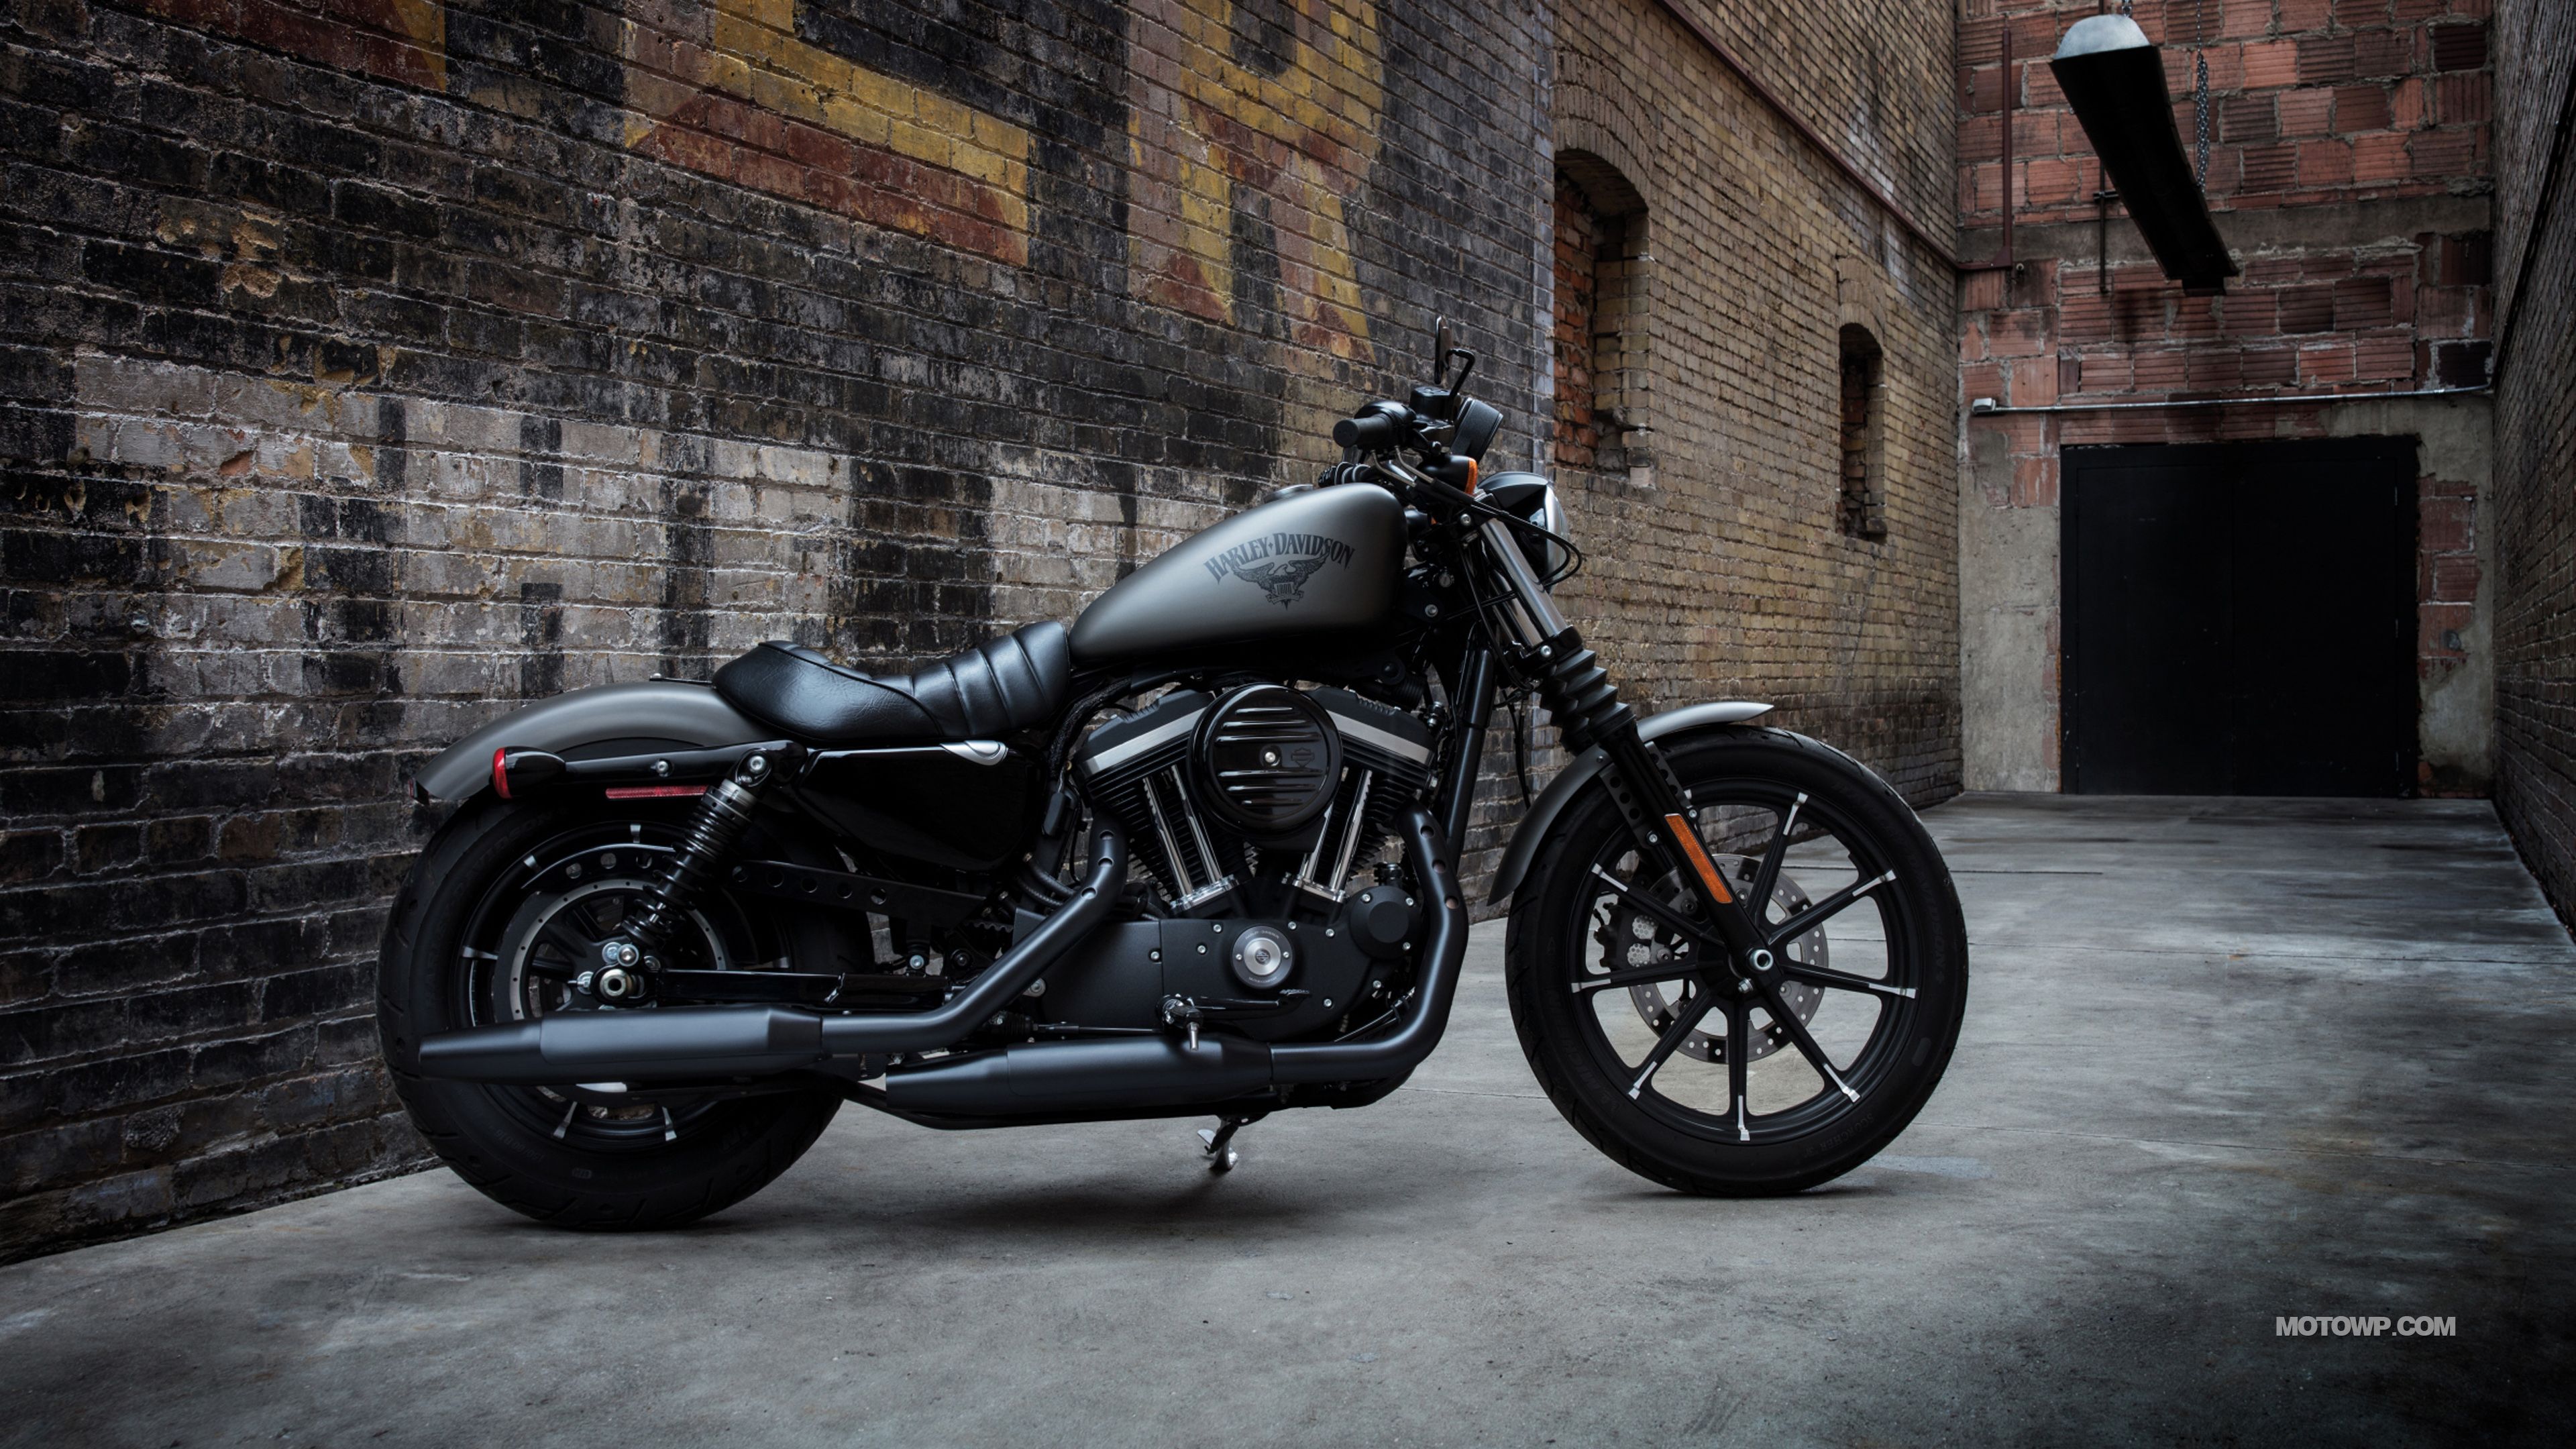 Harley Davidson Motorcycles Wallpaper